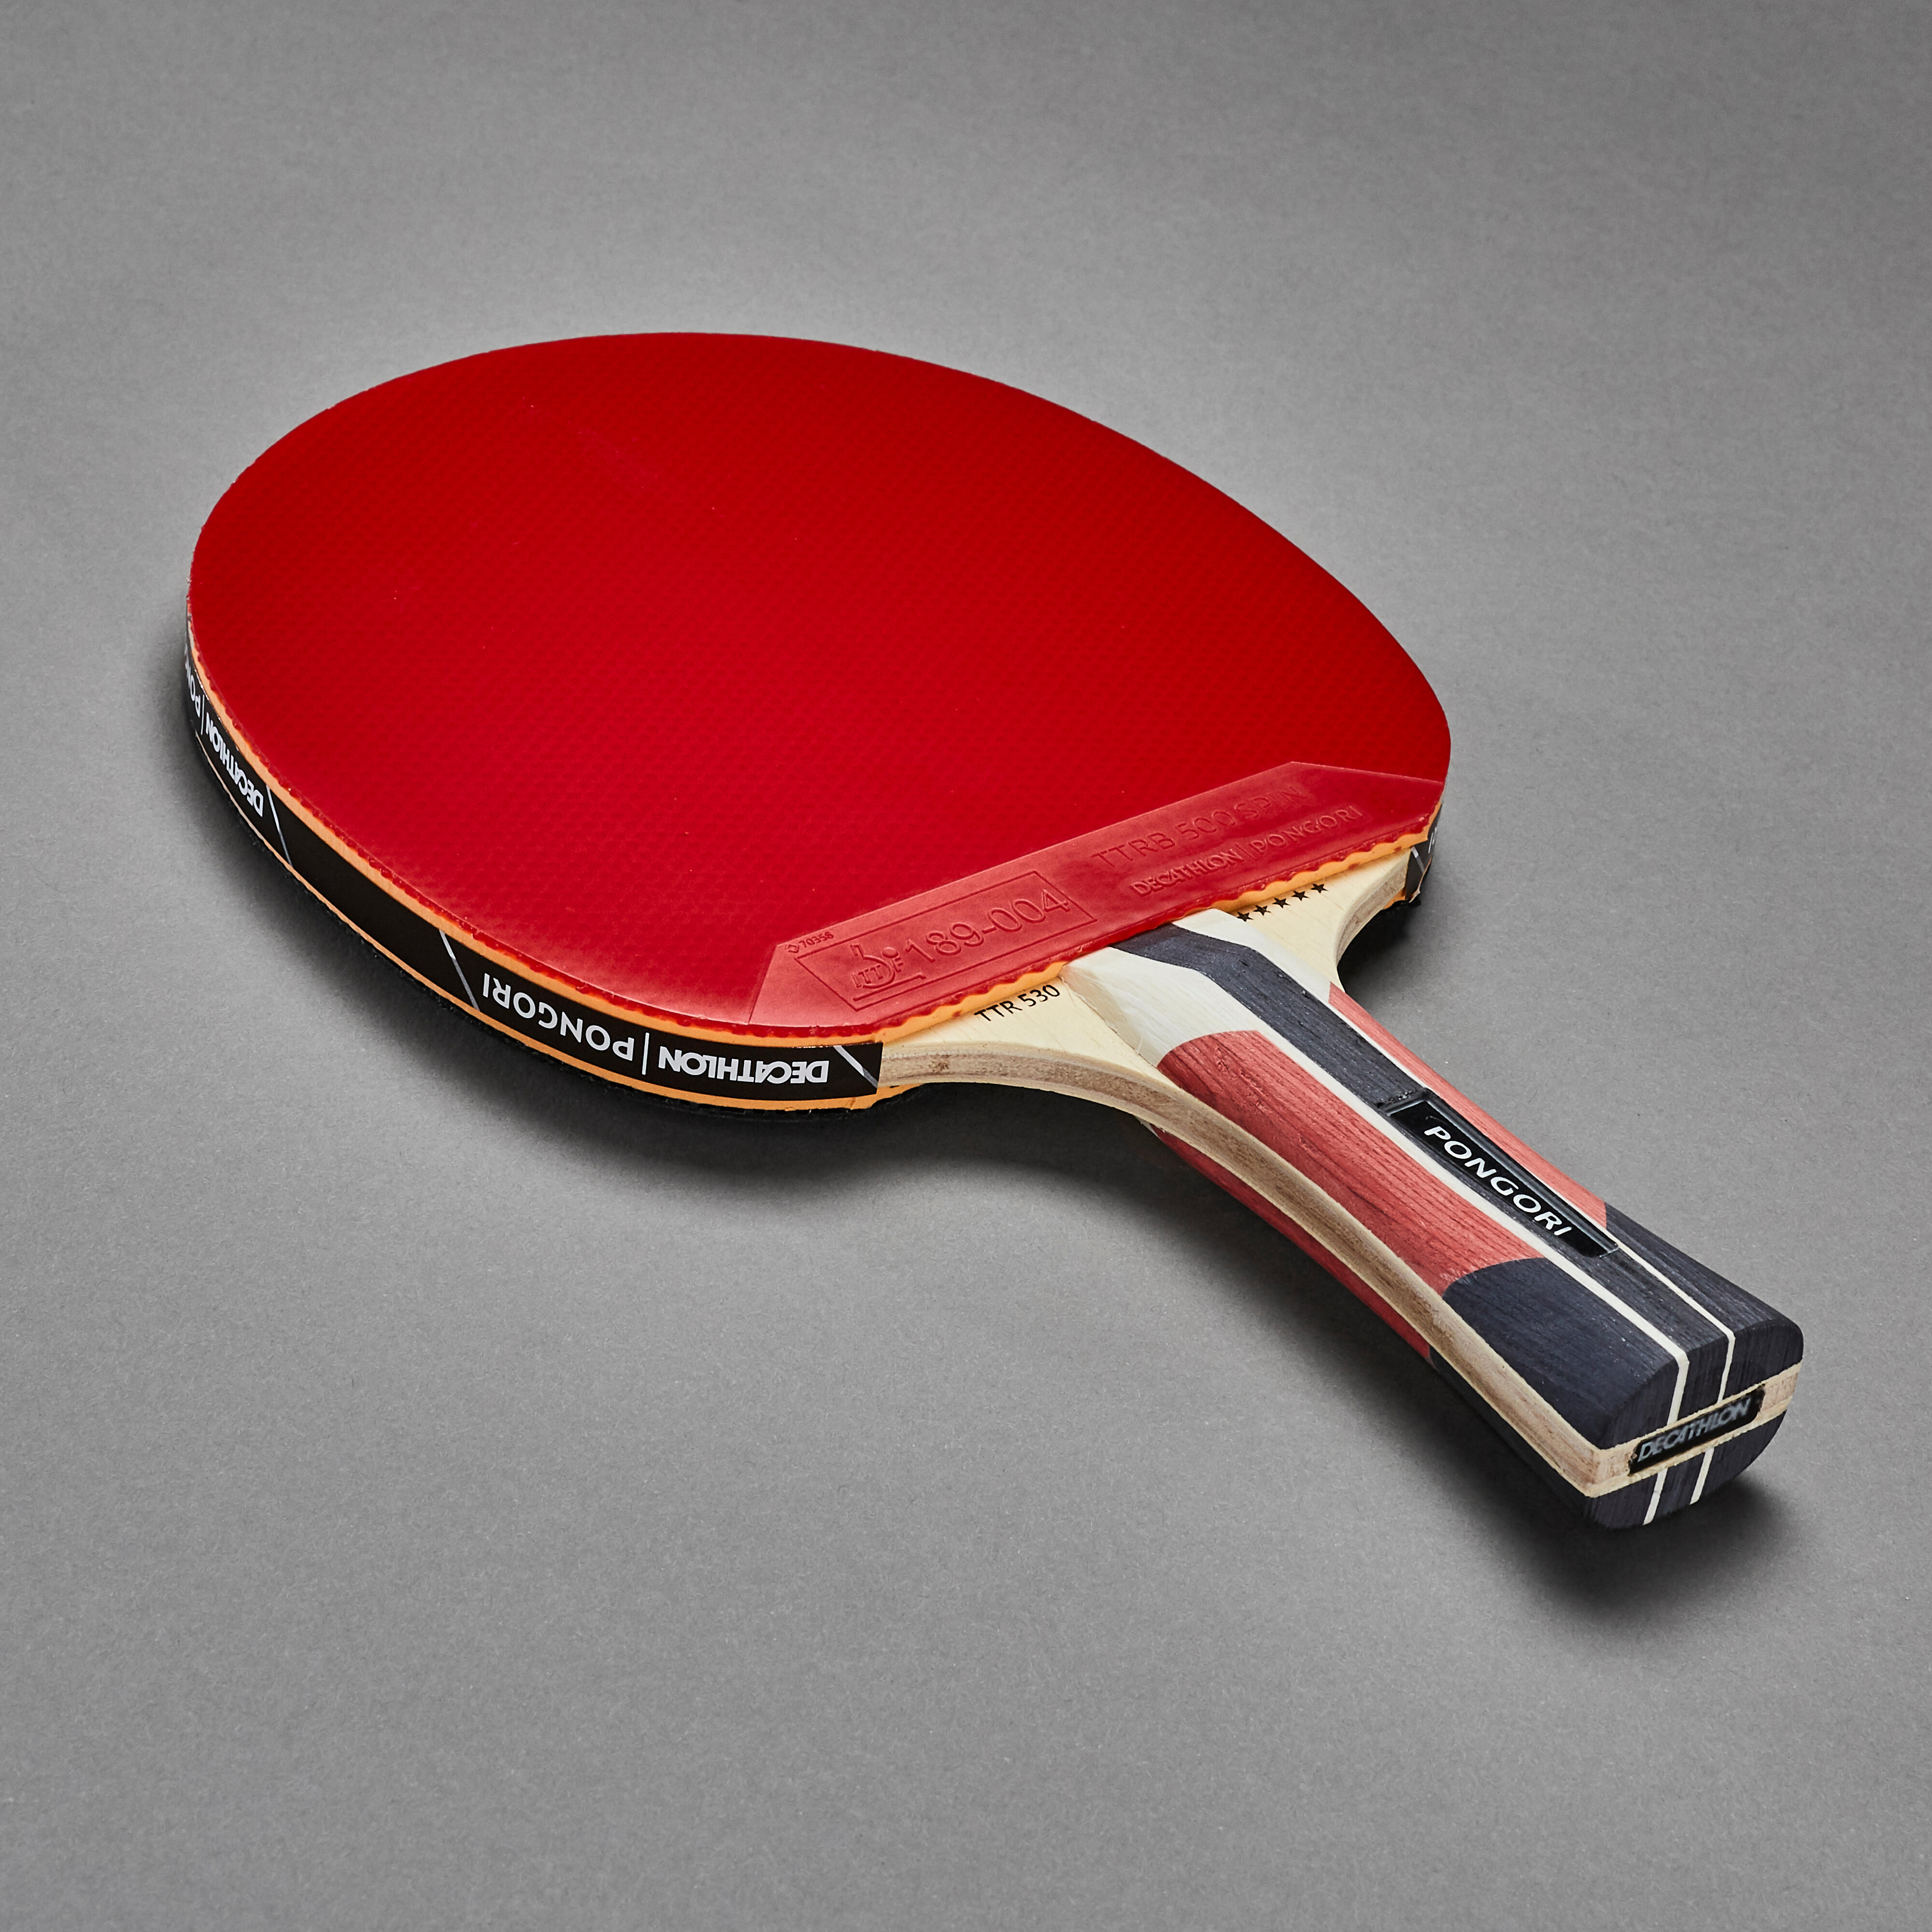 Club Table Tennis Paddle - TTR 530 5* Spin - PONGORI